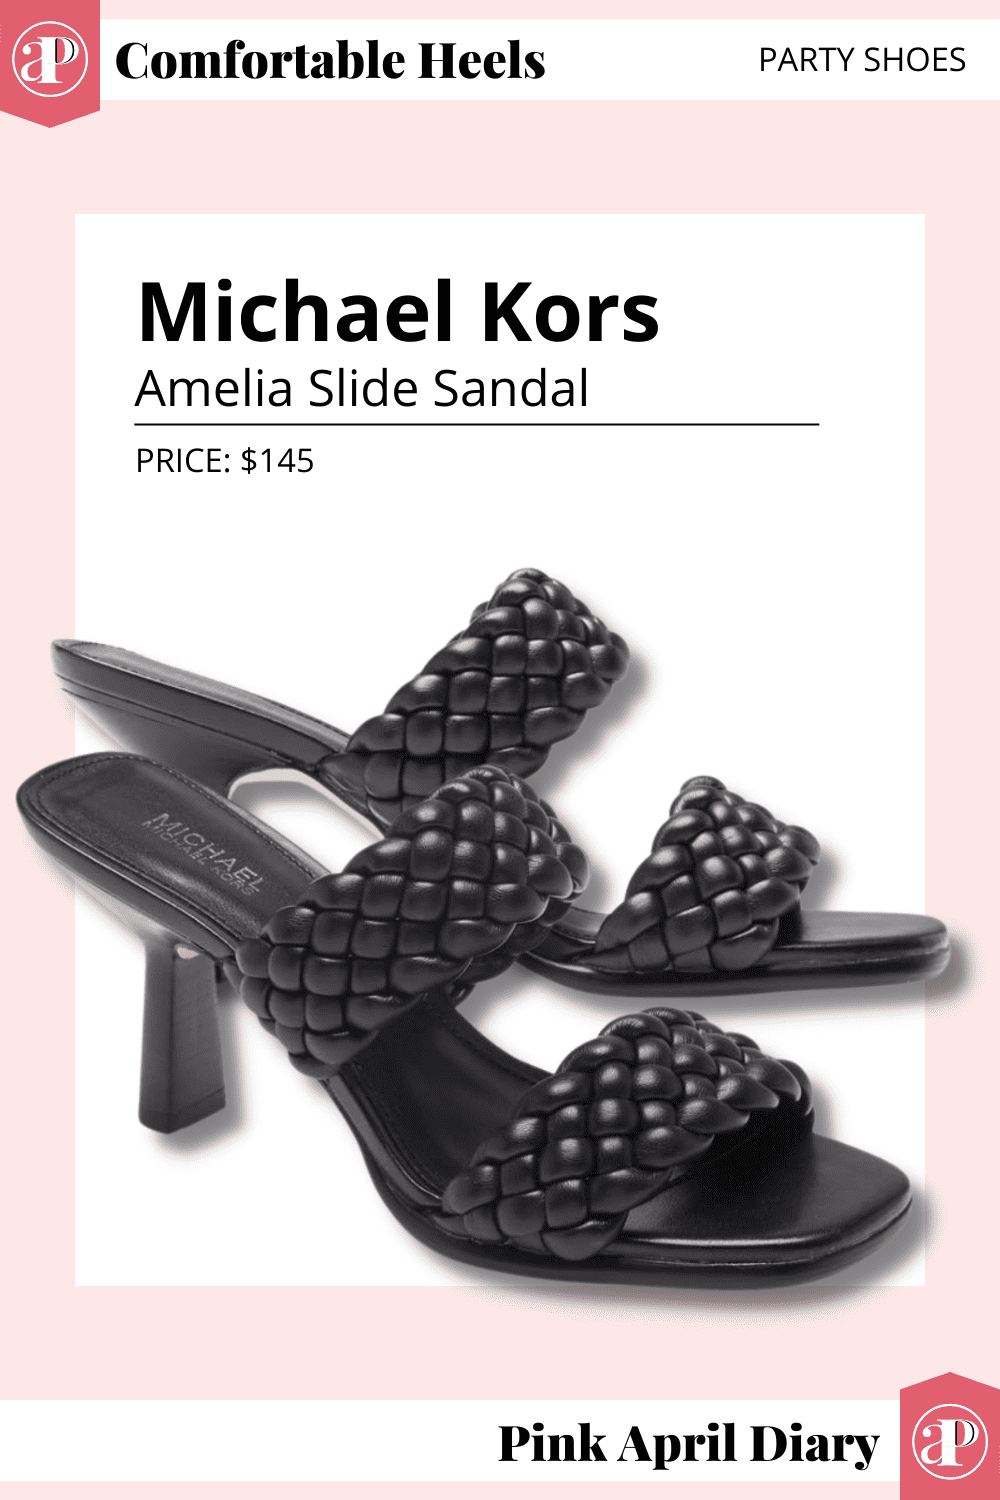 Michael Kors Amelia Slide Sandal